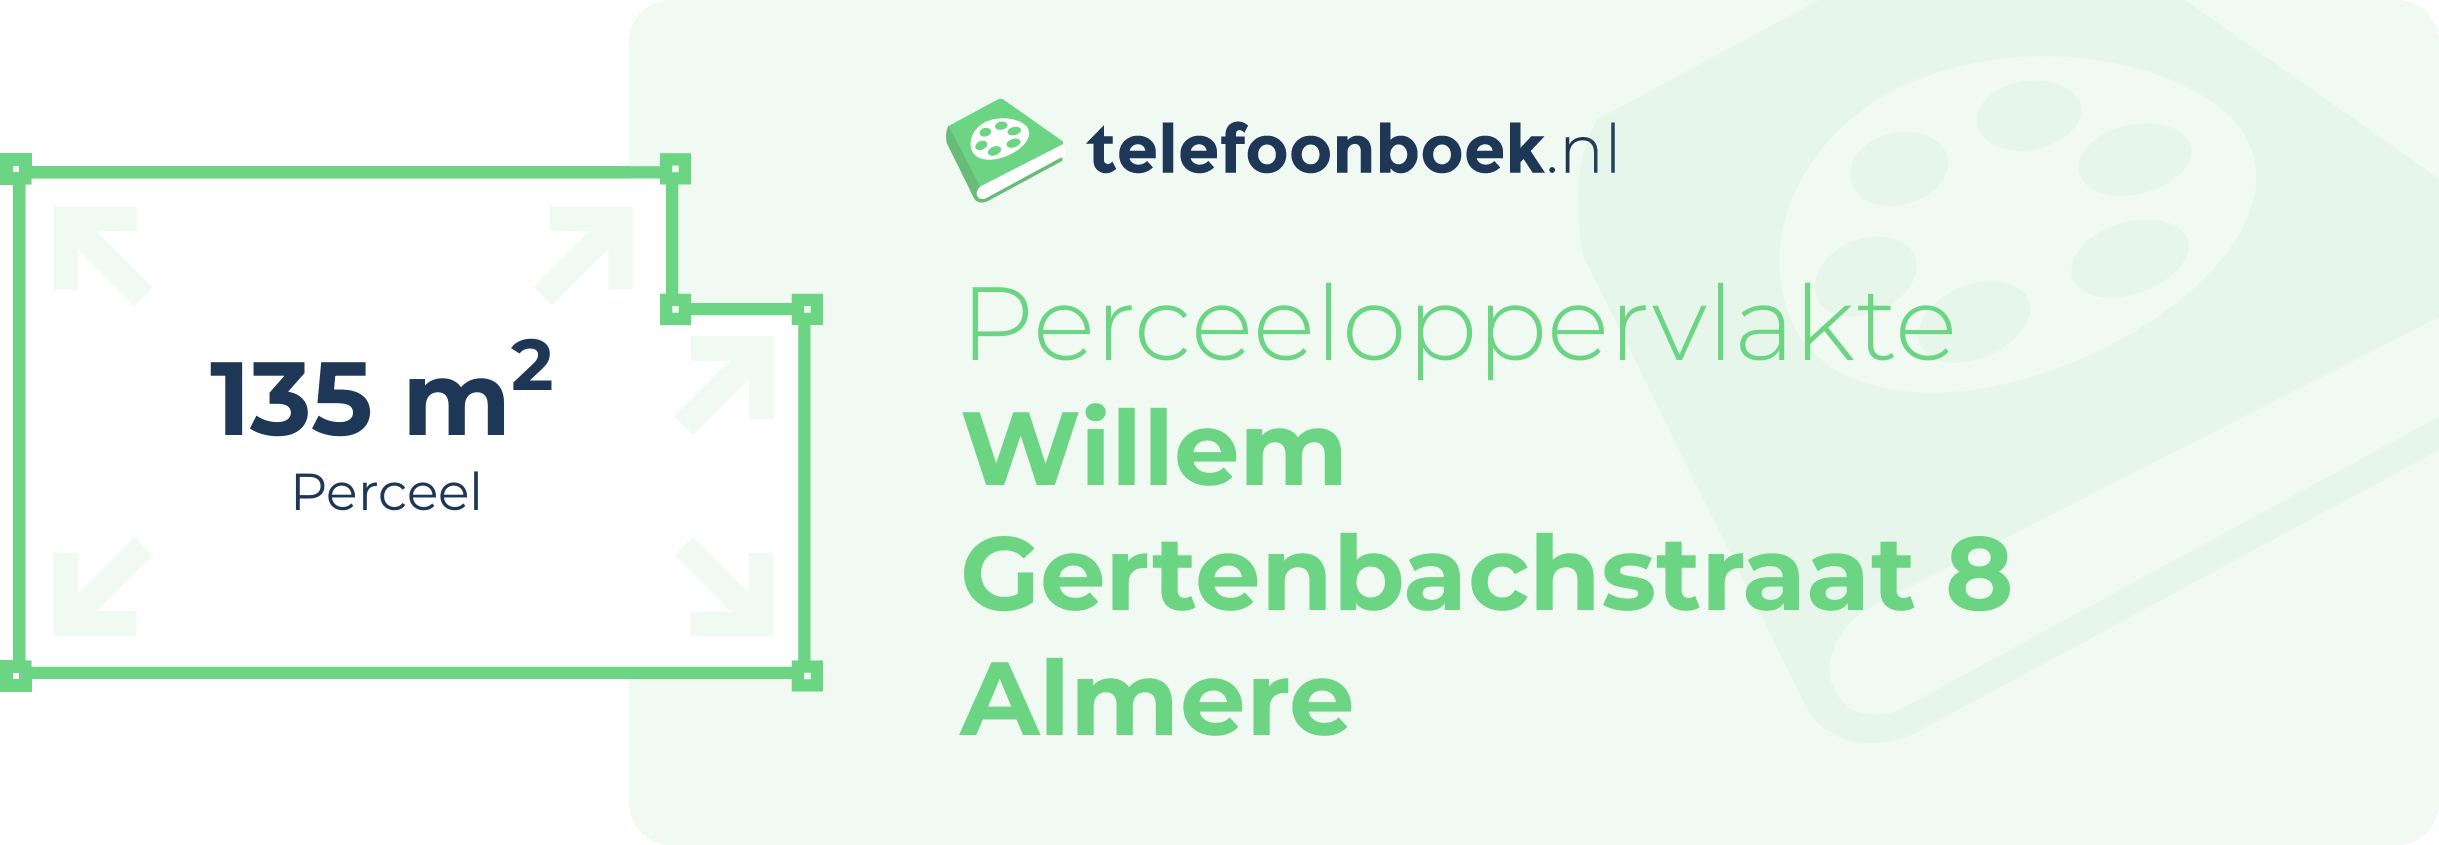 Perceeloppervlakte Willem Gertenbachstraat 8 Almere